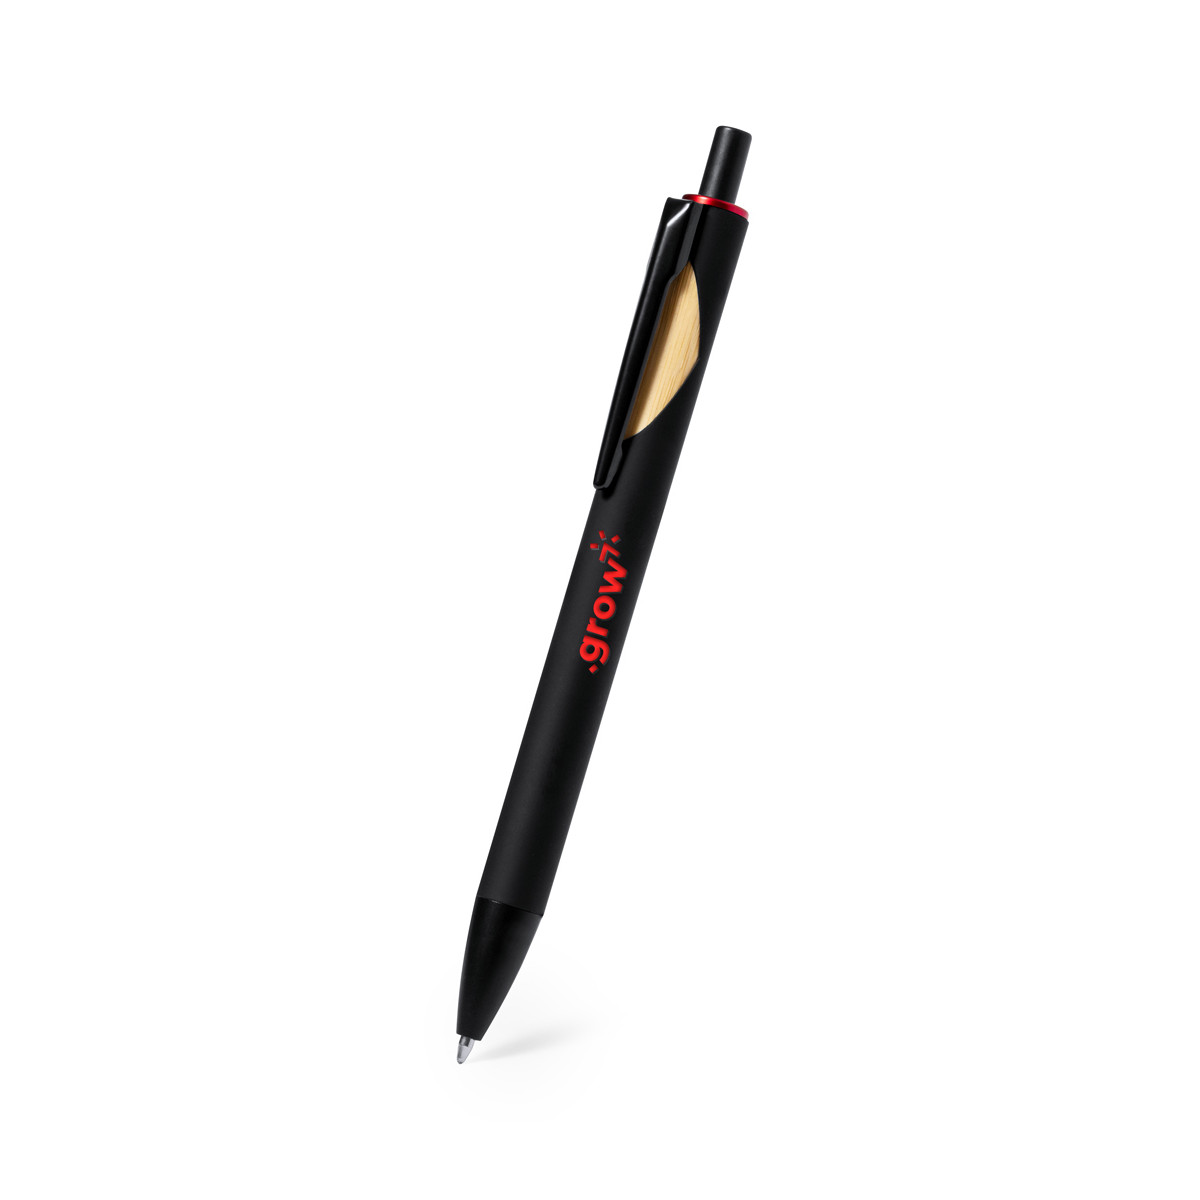 Bolígrafo metálico negro y detalle en bambú para regalar - Bolígrafo Piklam